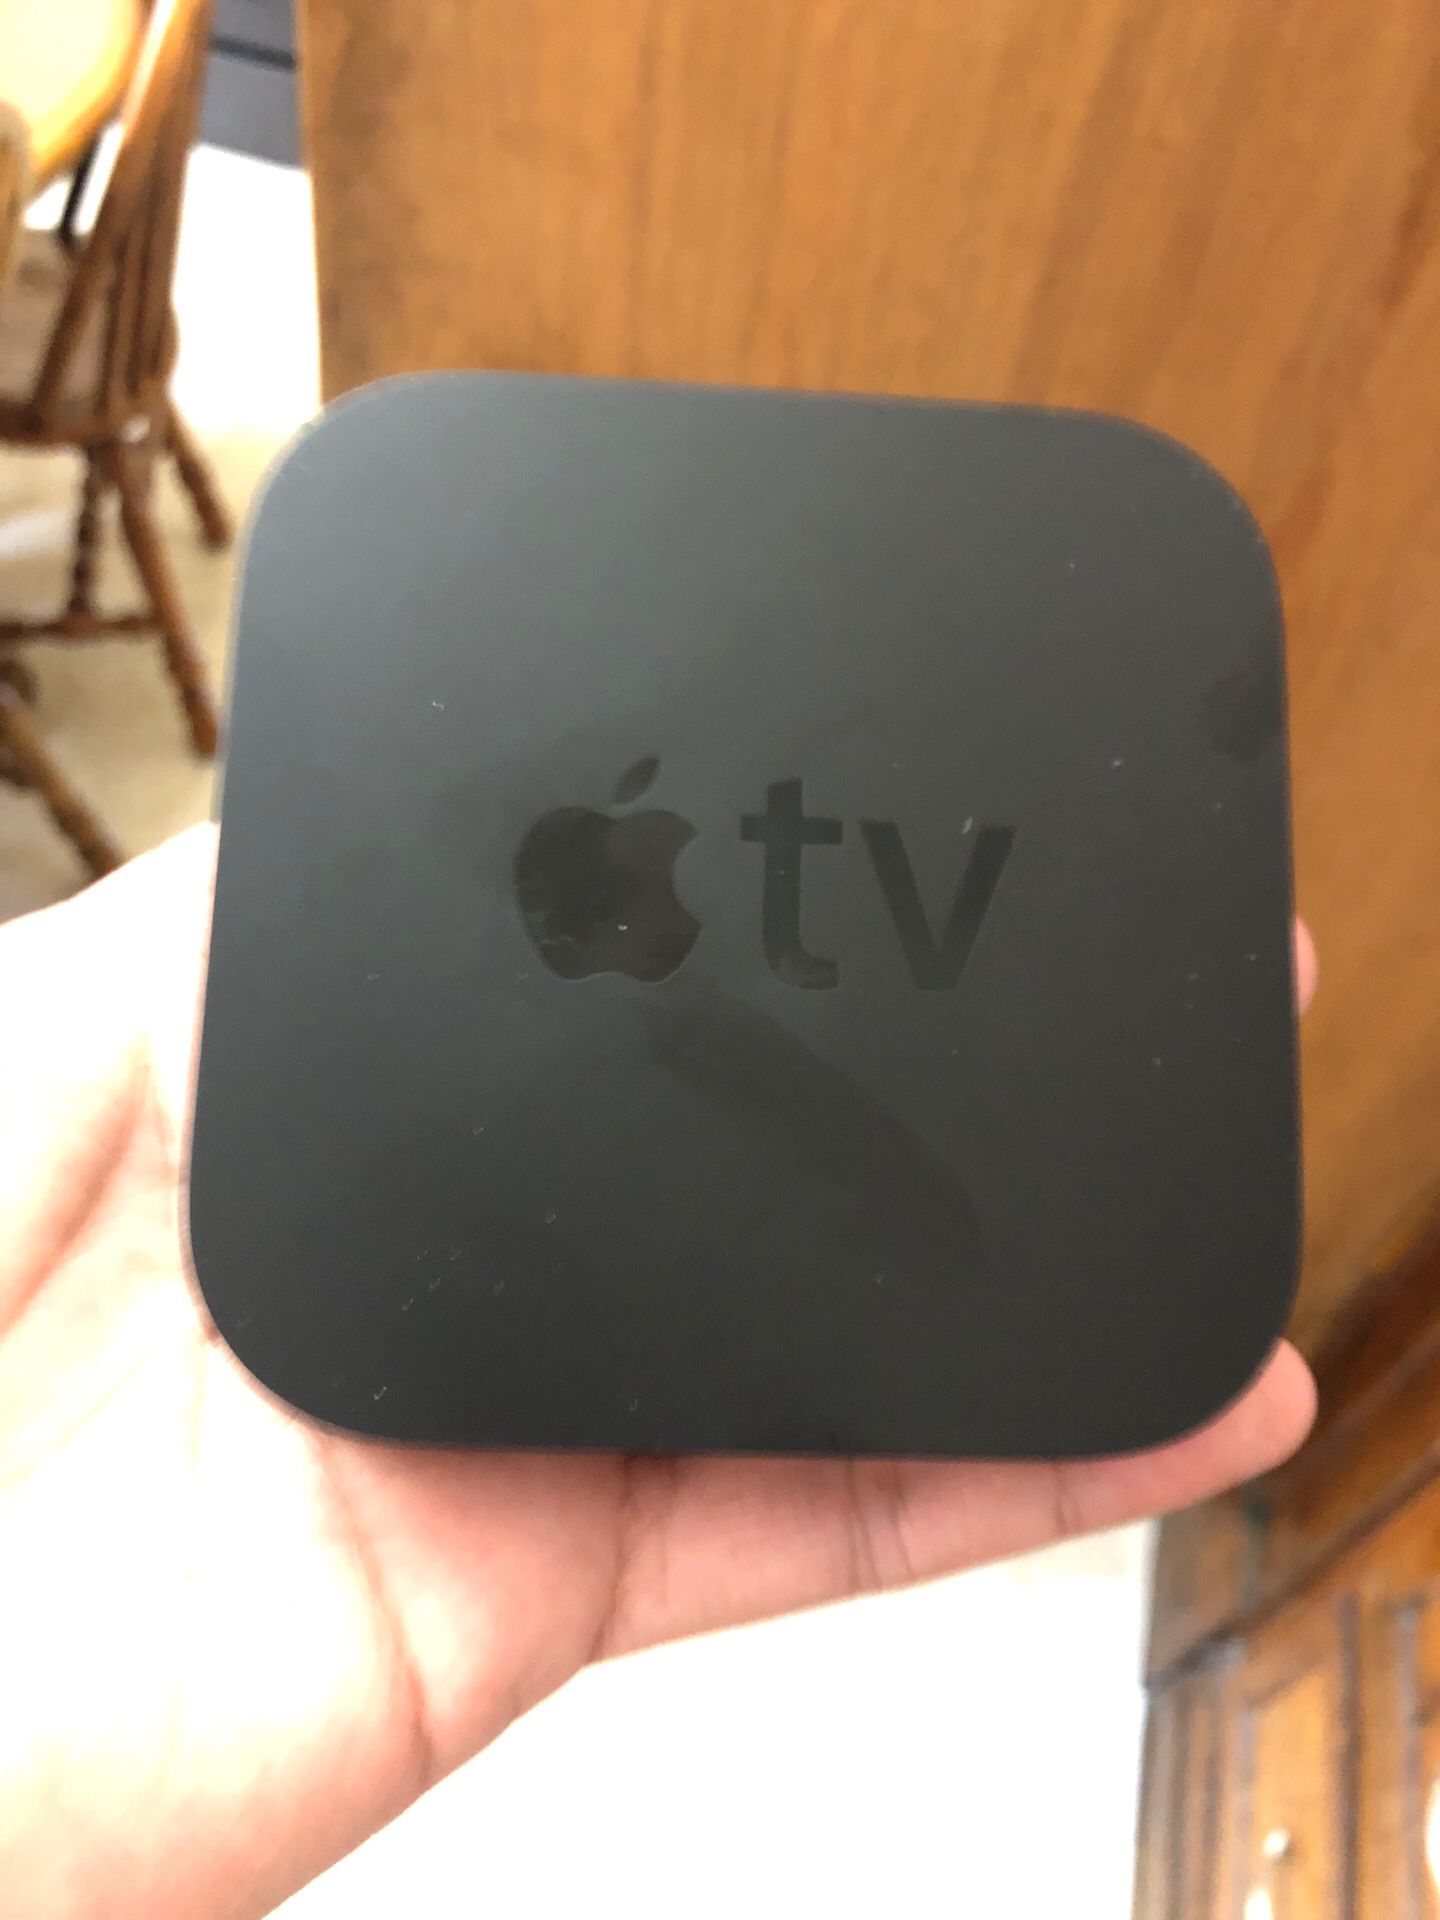 Apple TV with plug (no control)